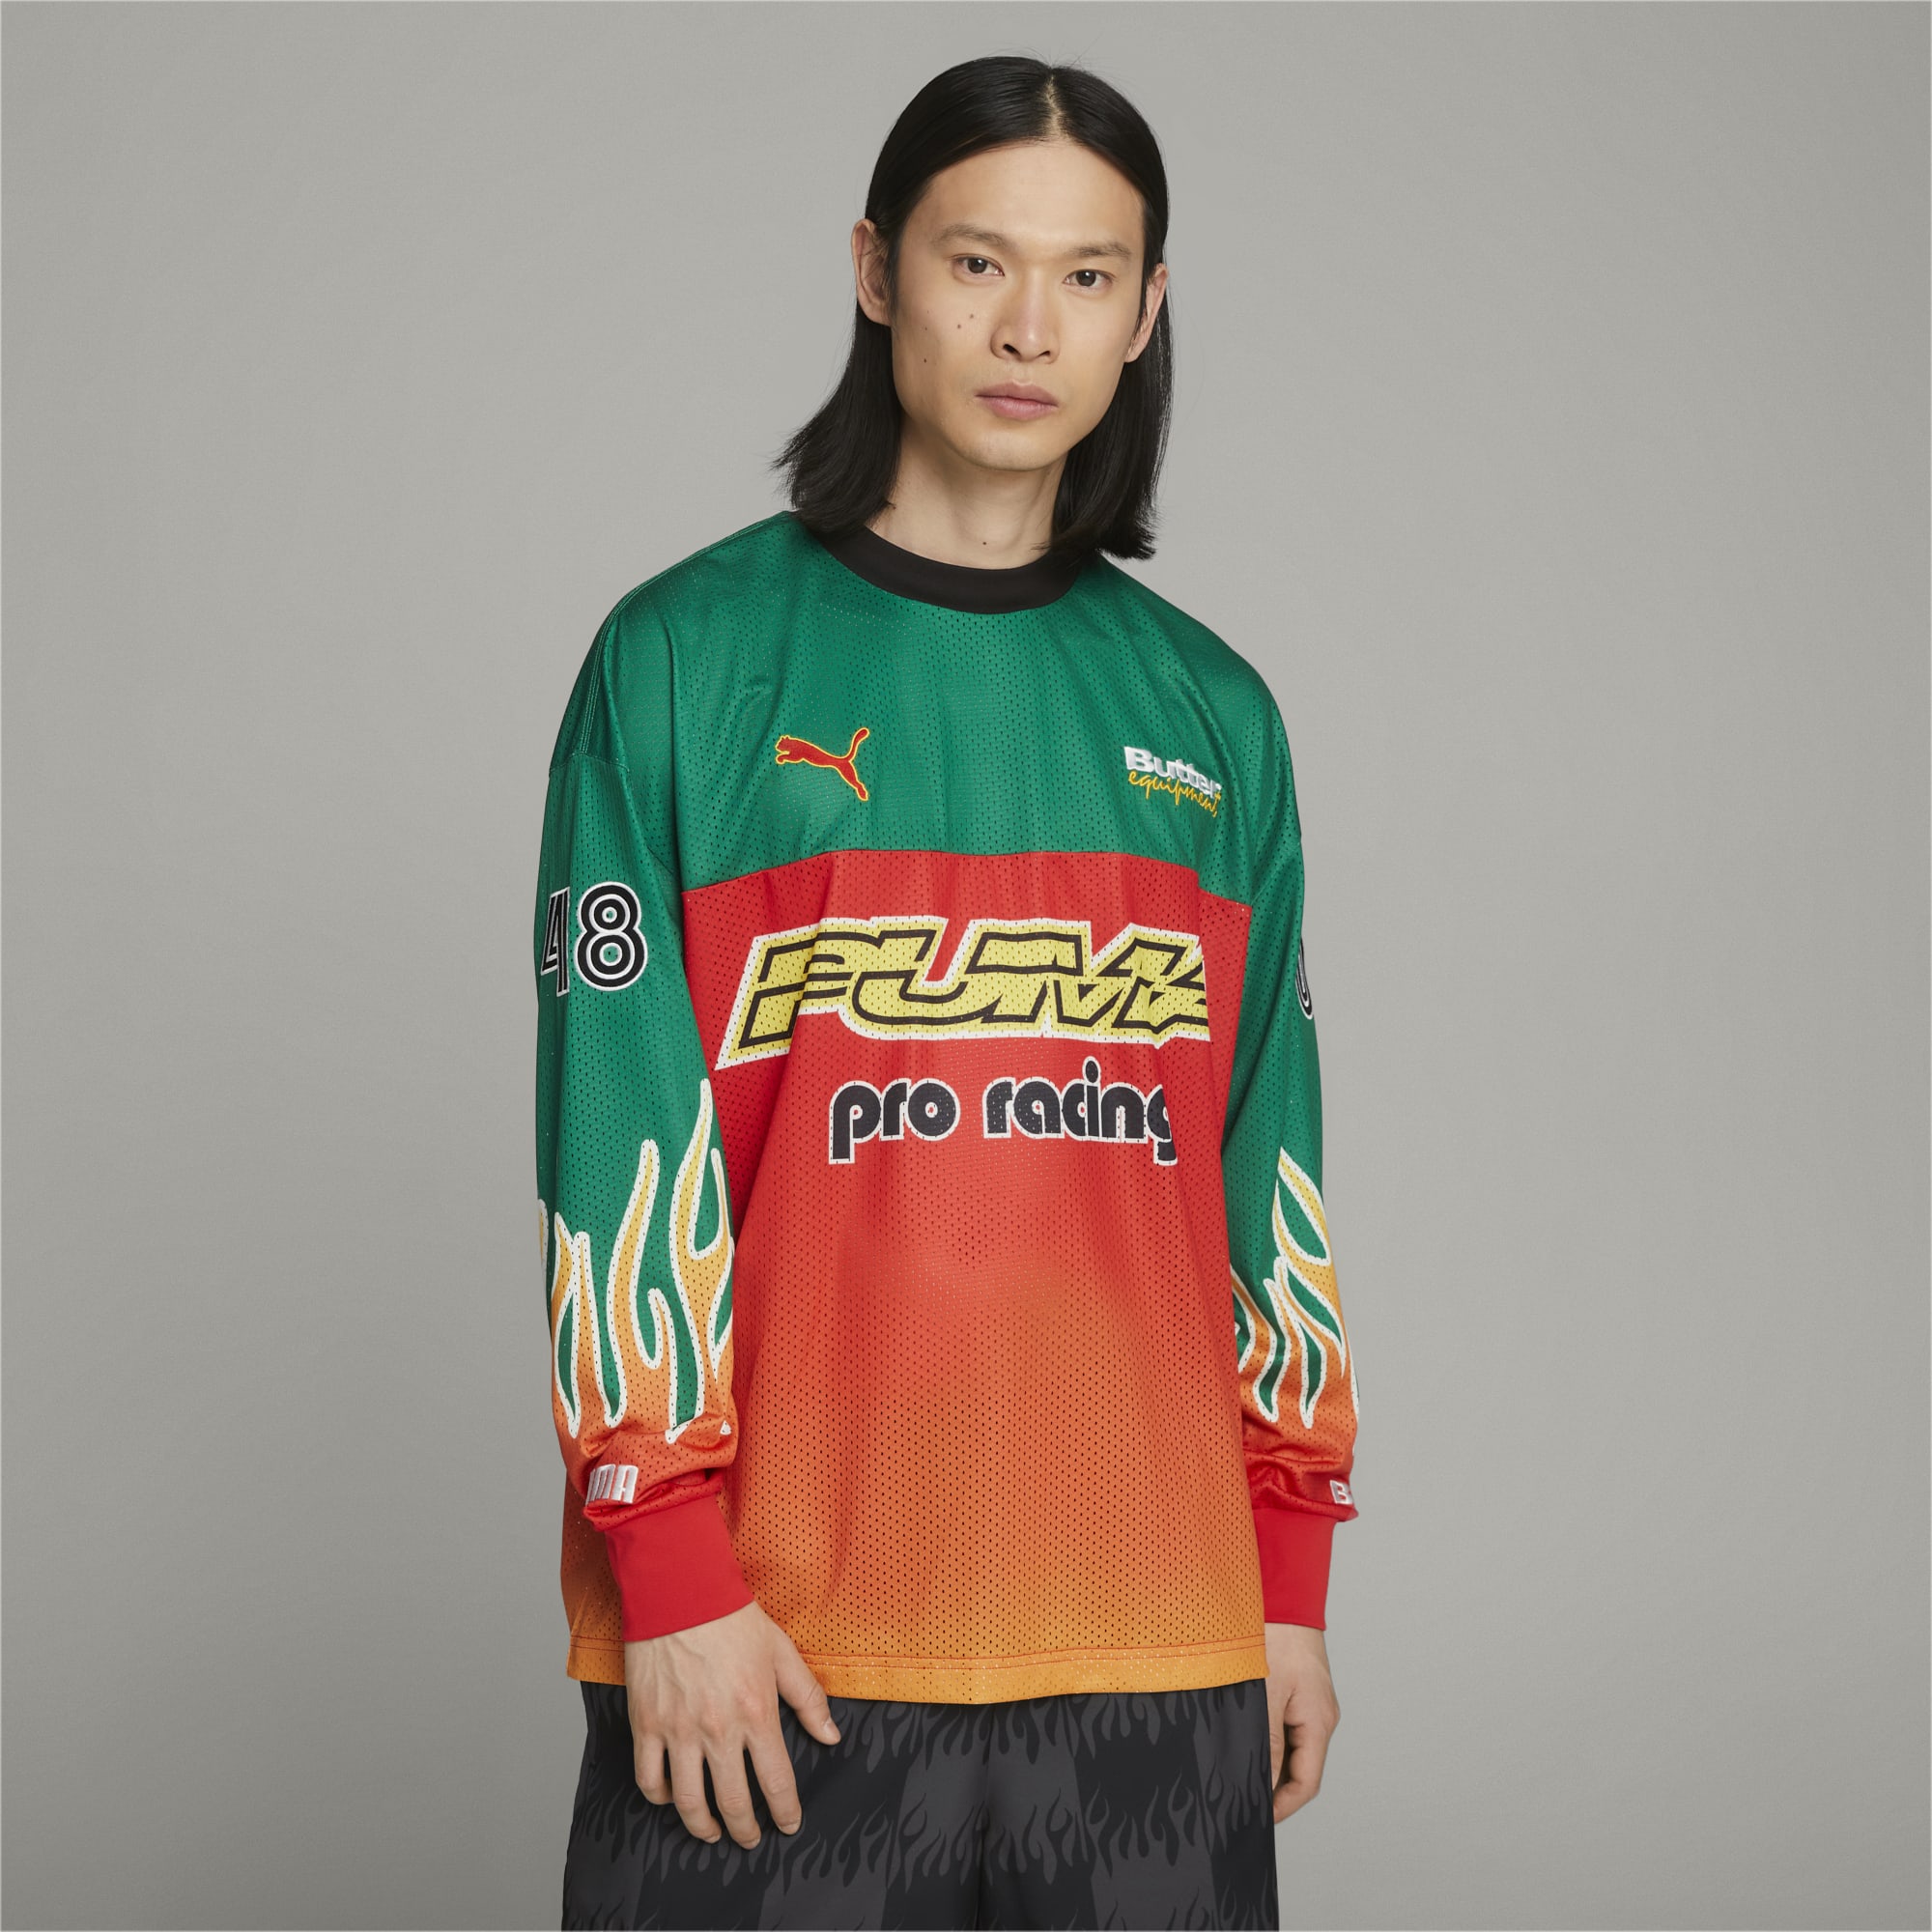 Camiseta deportiva - Ropa Deportiva - ROPA - Hombre 